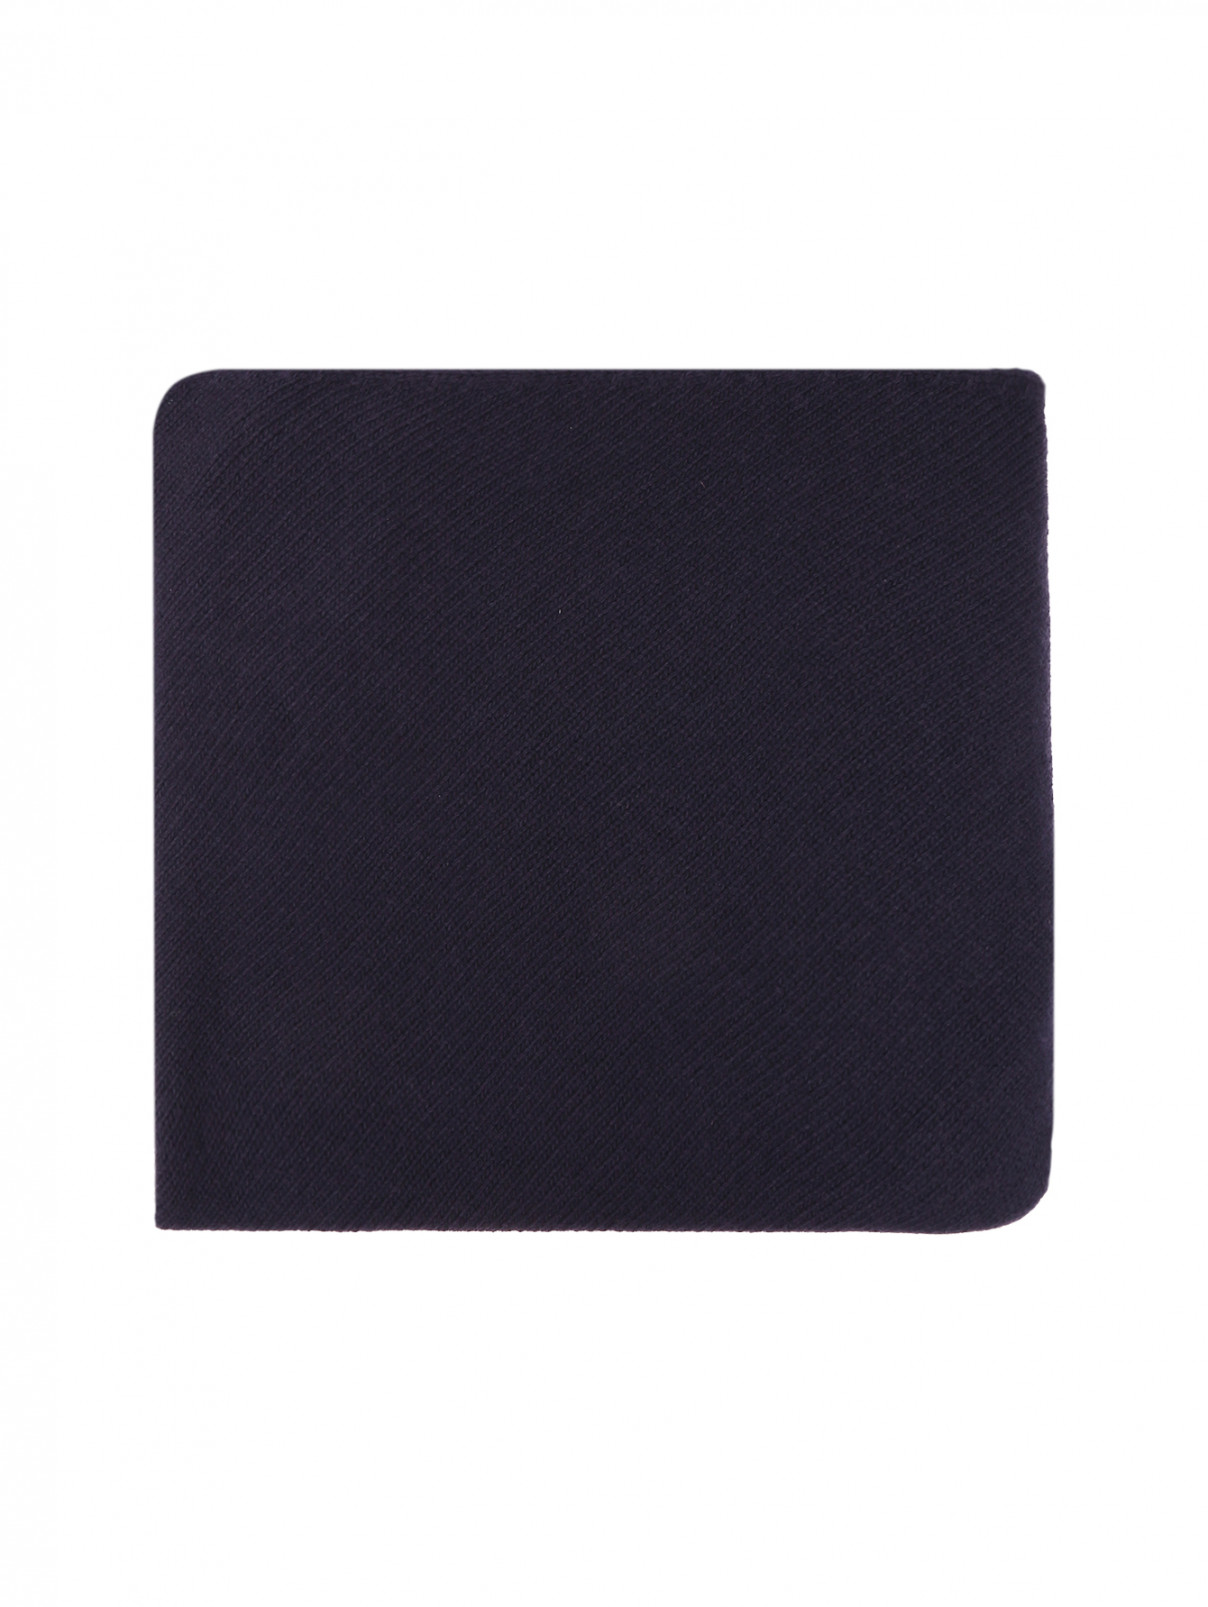 Платок из шерсти с бахромой Weekend Max Mara  –  Общий вид  – Цвет:  Синий